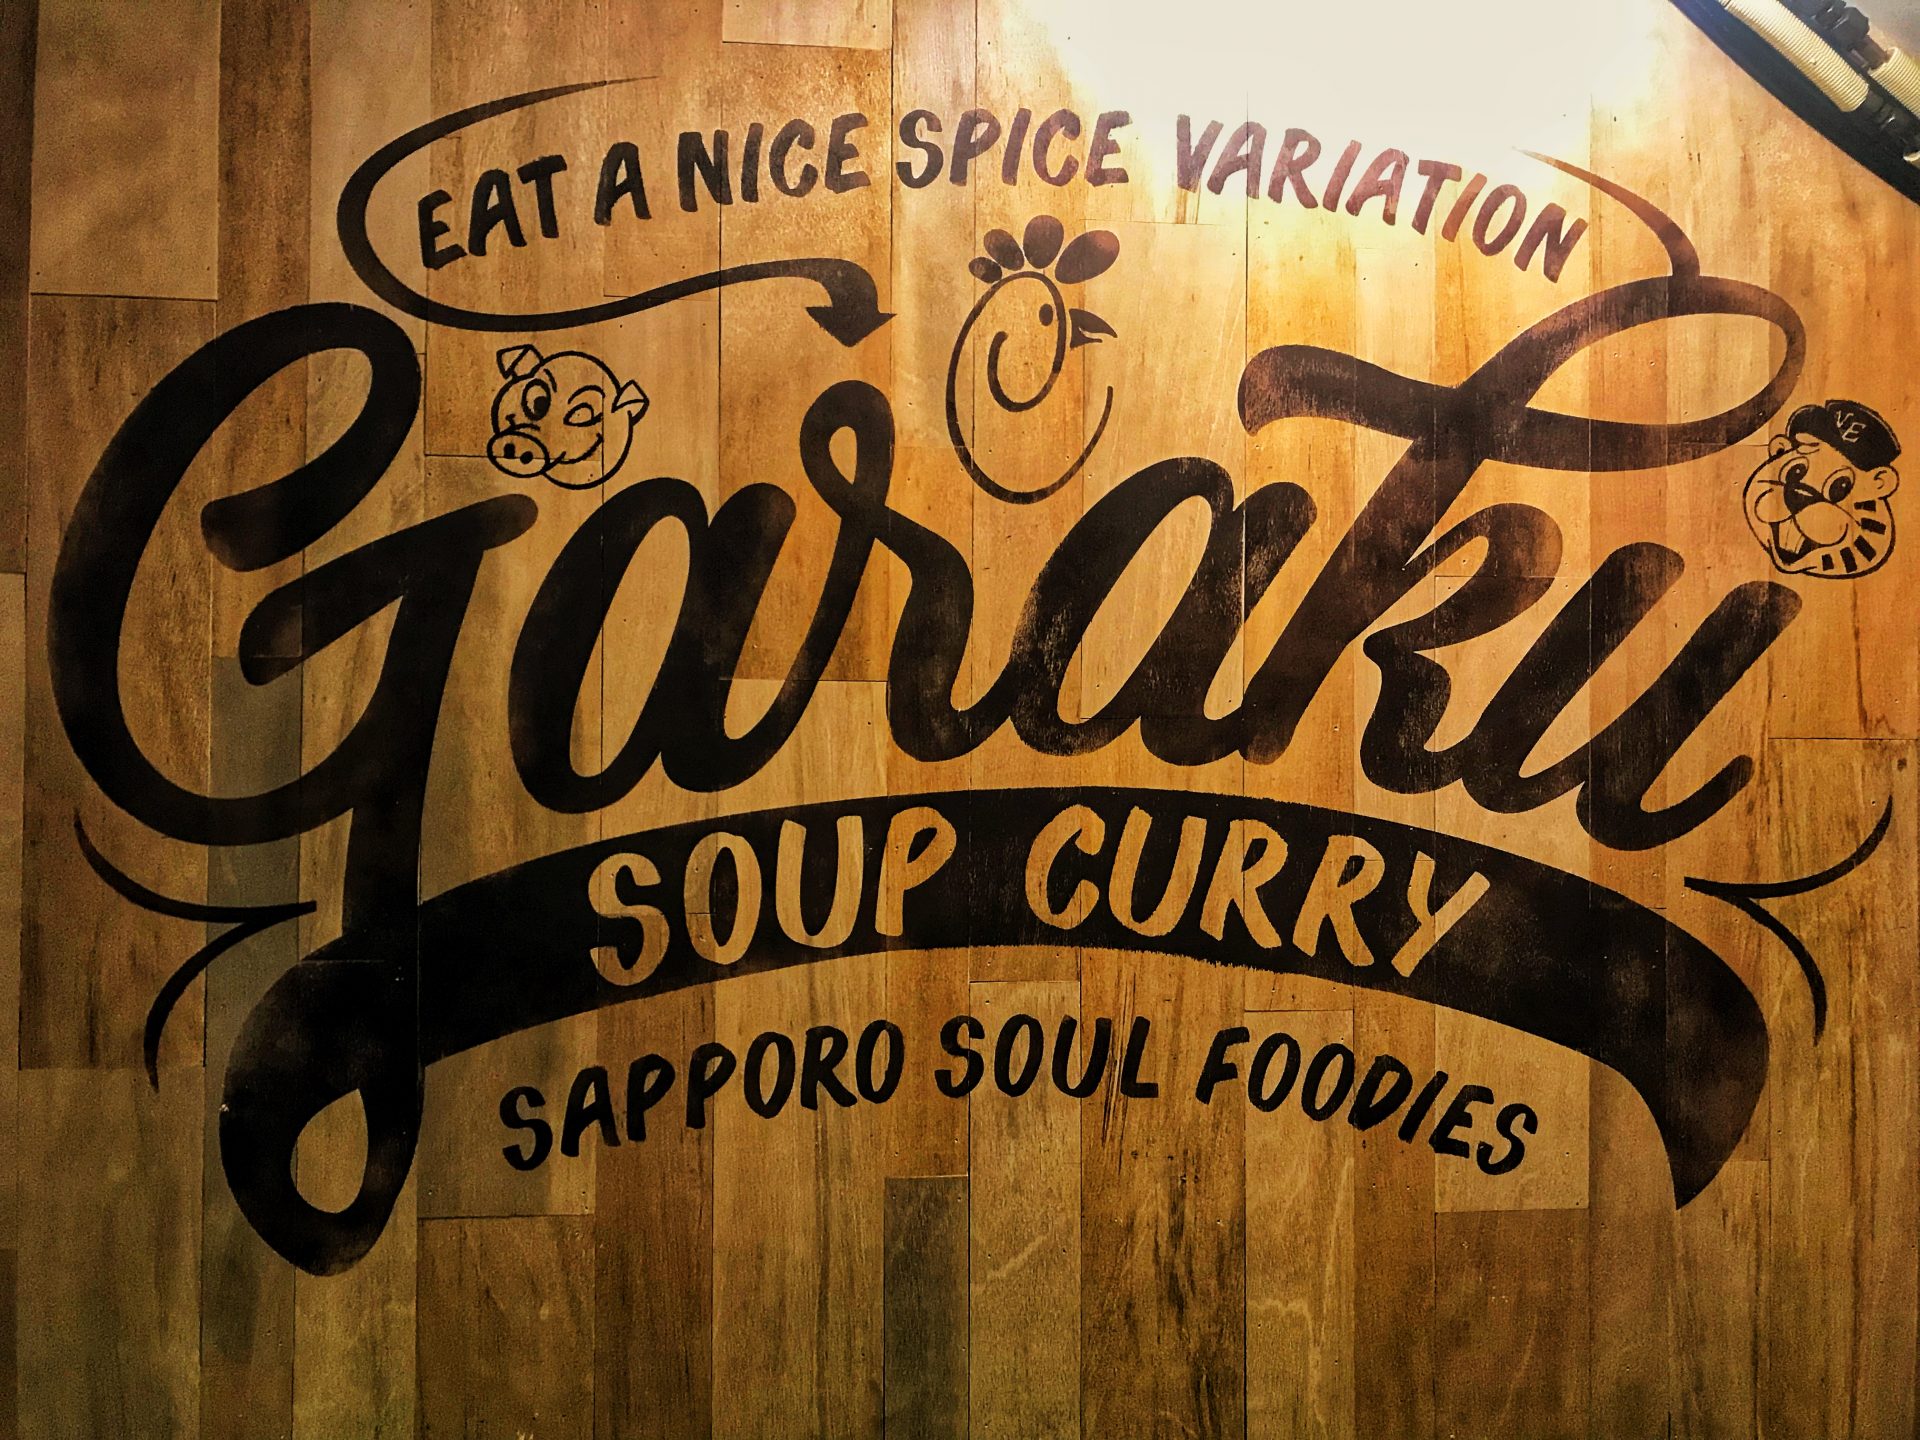 The Soup Curry from Garaku Sapporo